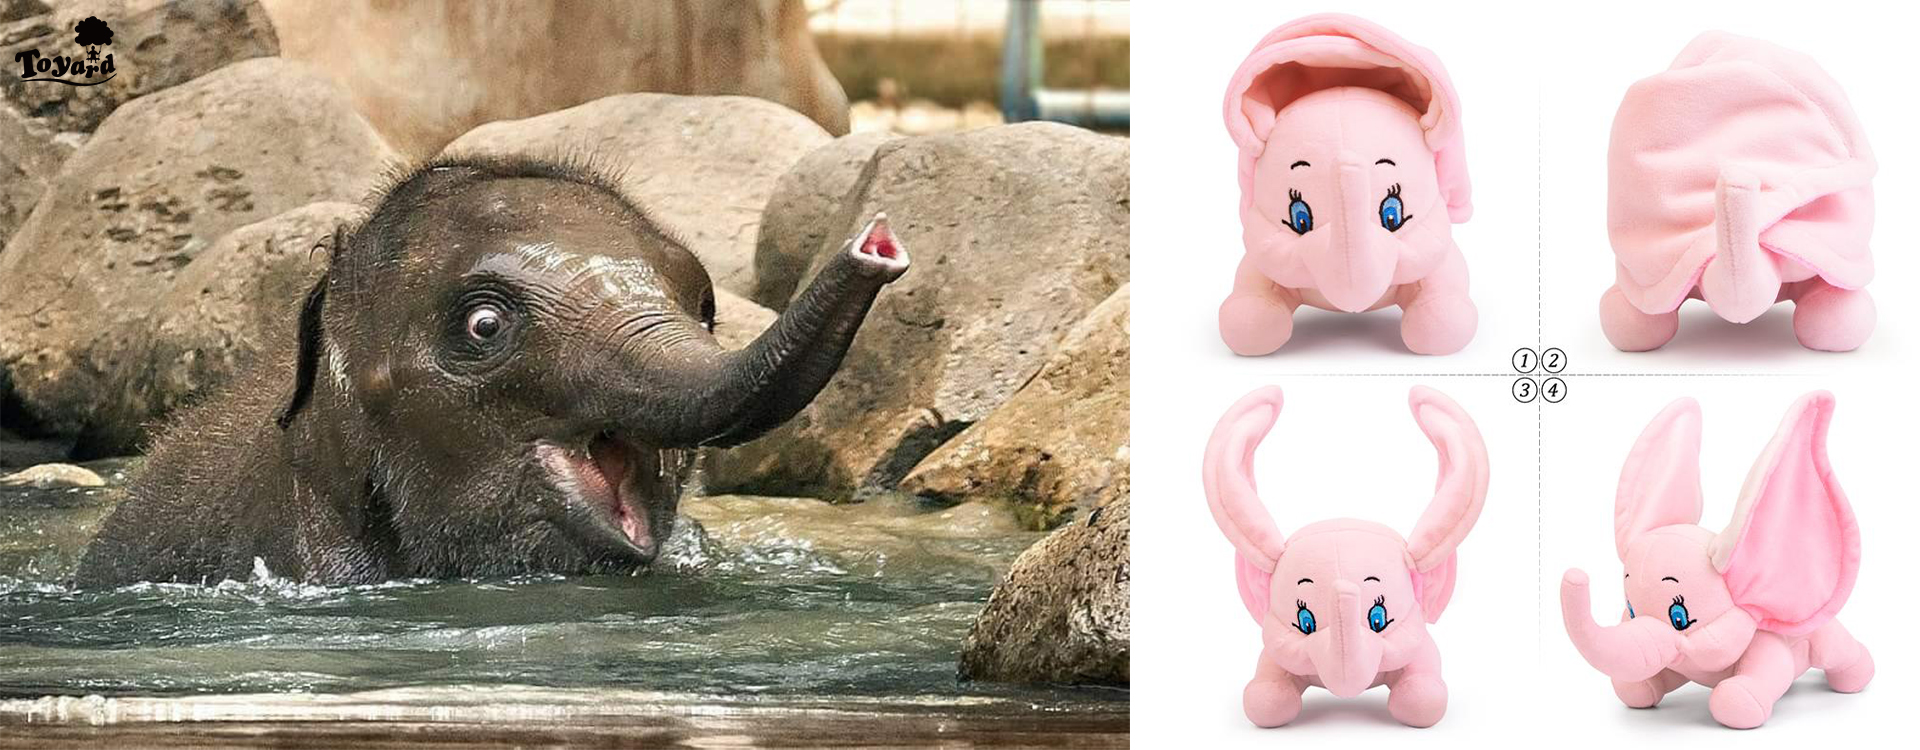 Which Scene Can Use Cute Stuffed Elephant